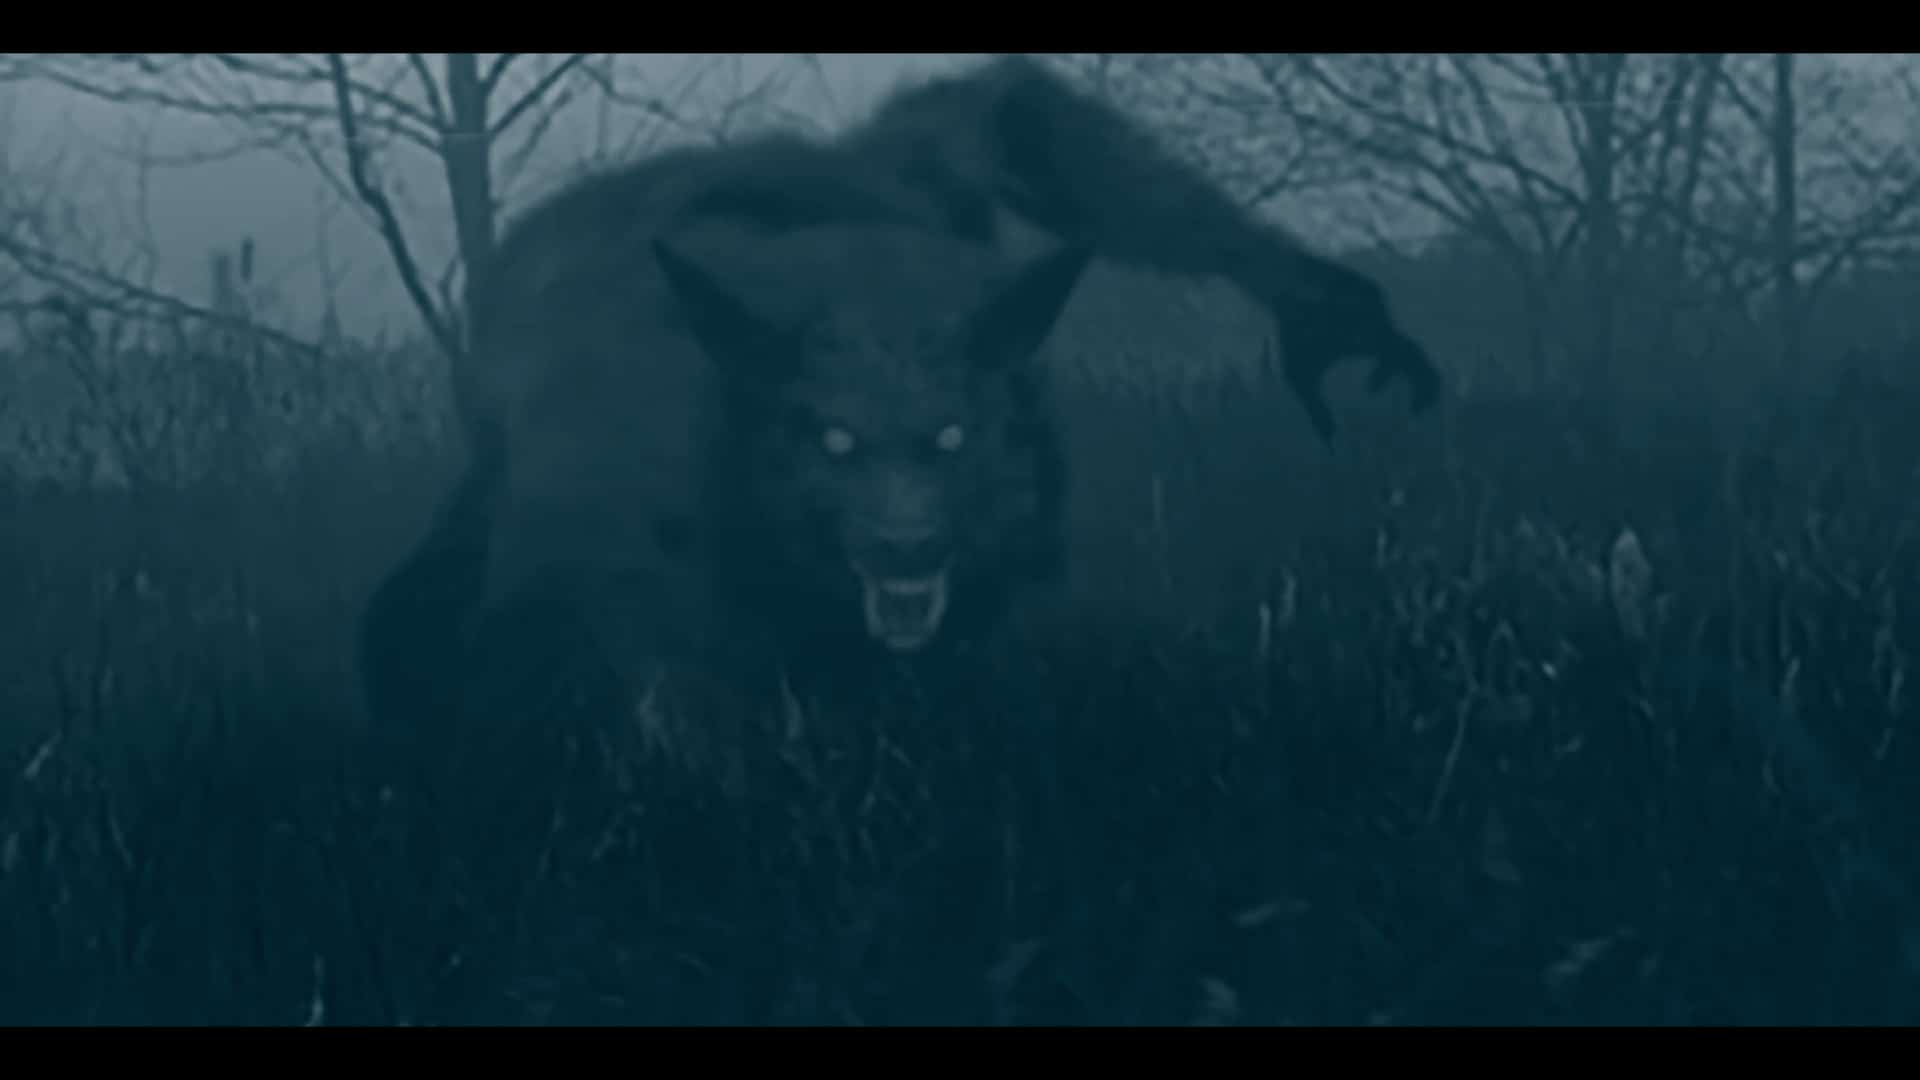 50 best movies about werewolves